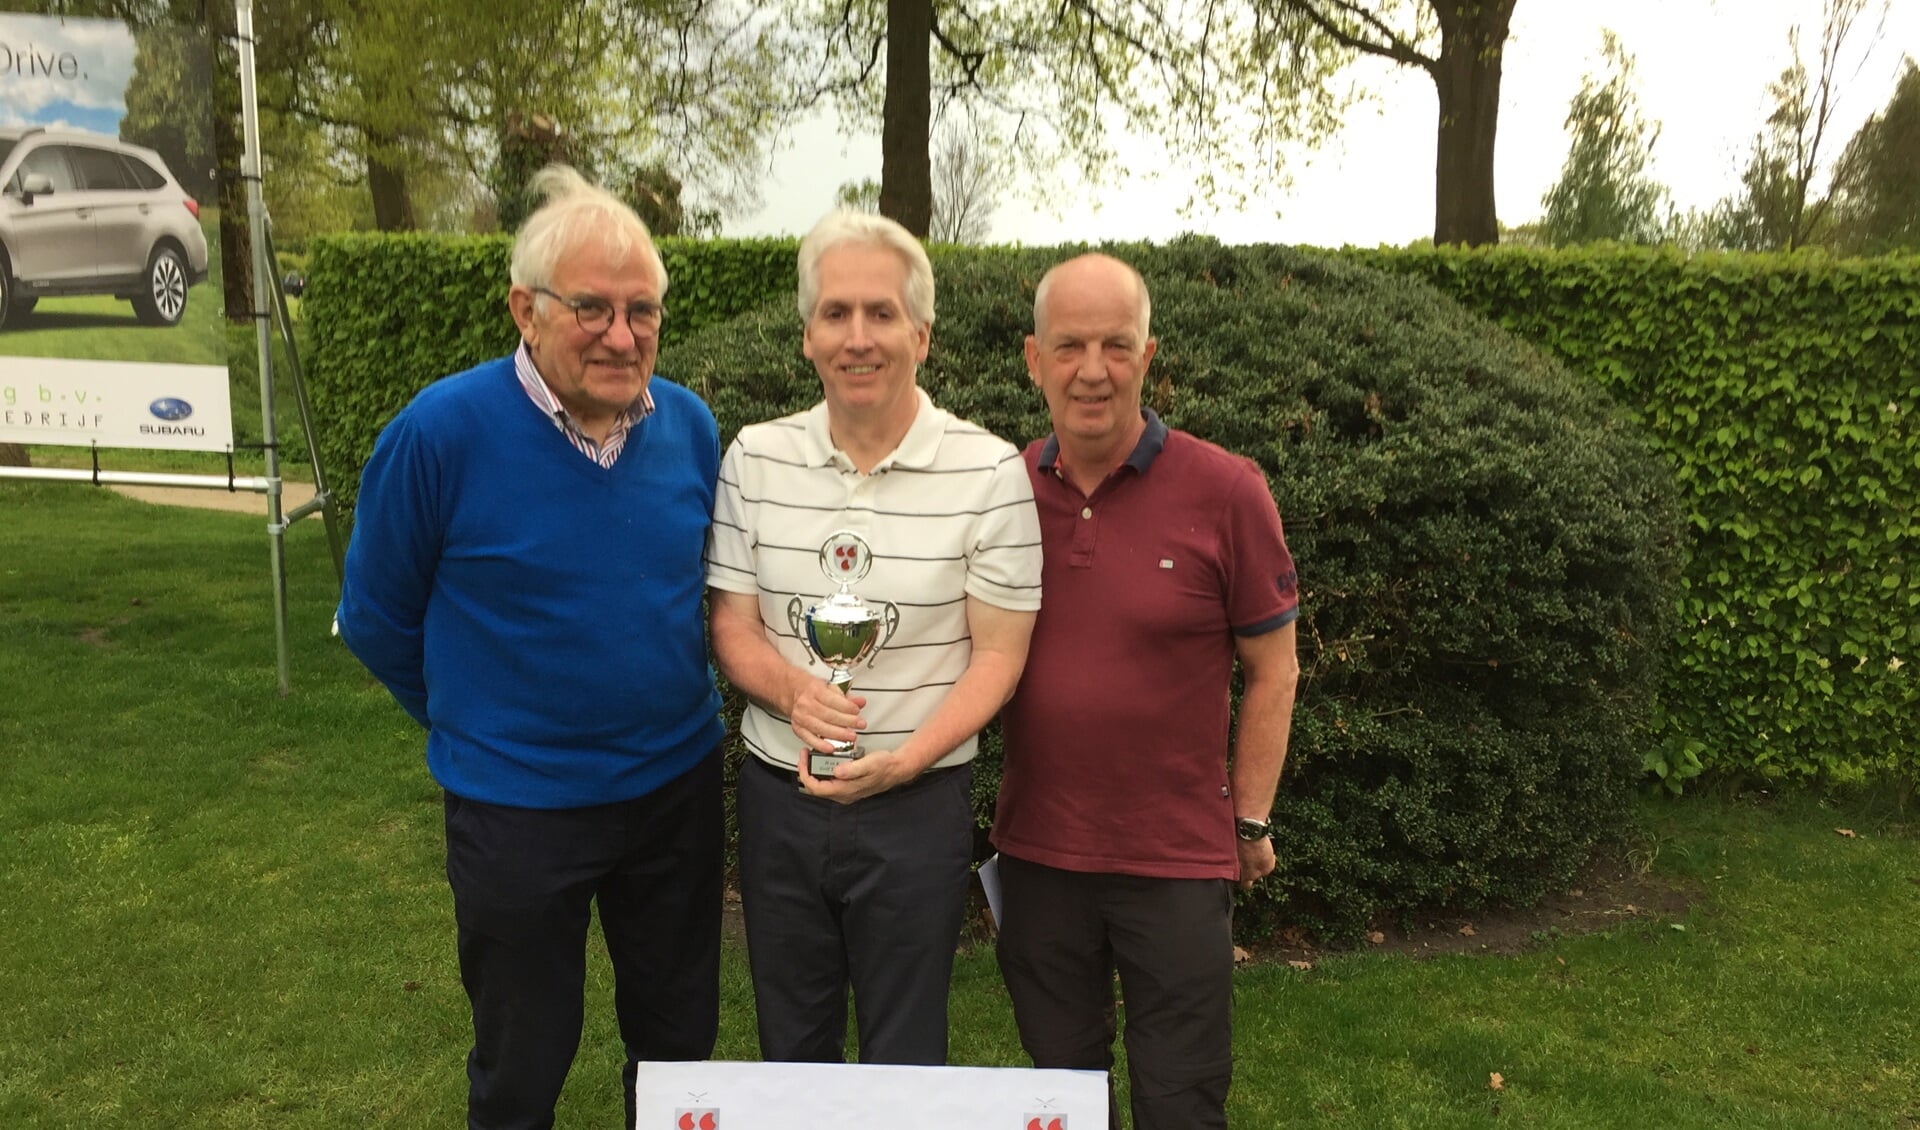 De beste drie van de HenK Golf wedstrijd: (v.l.n.r.) Thomas Verheul, Michael Turner en Hans Huntelaar.